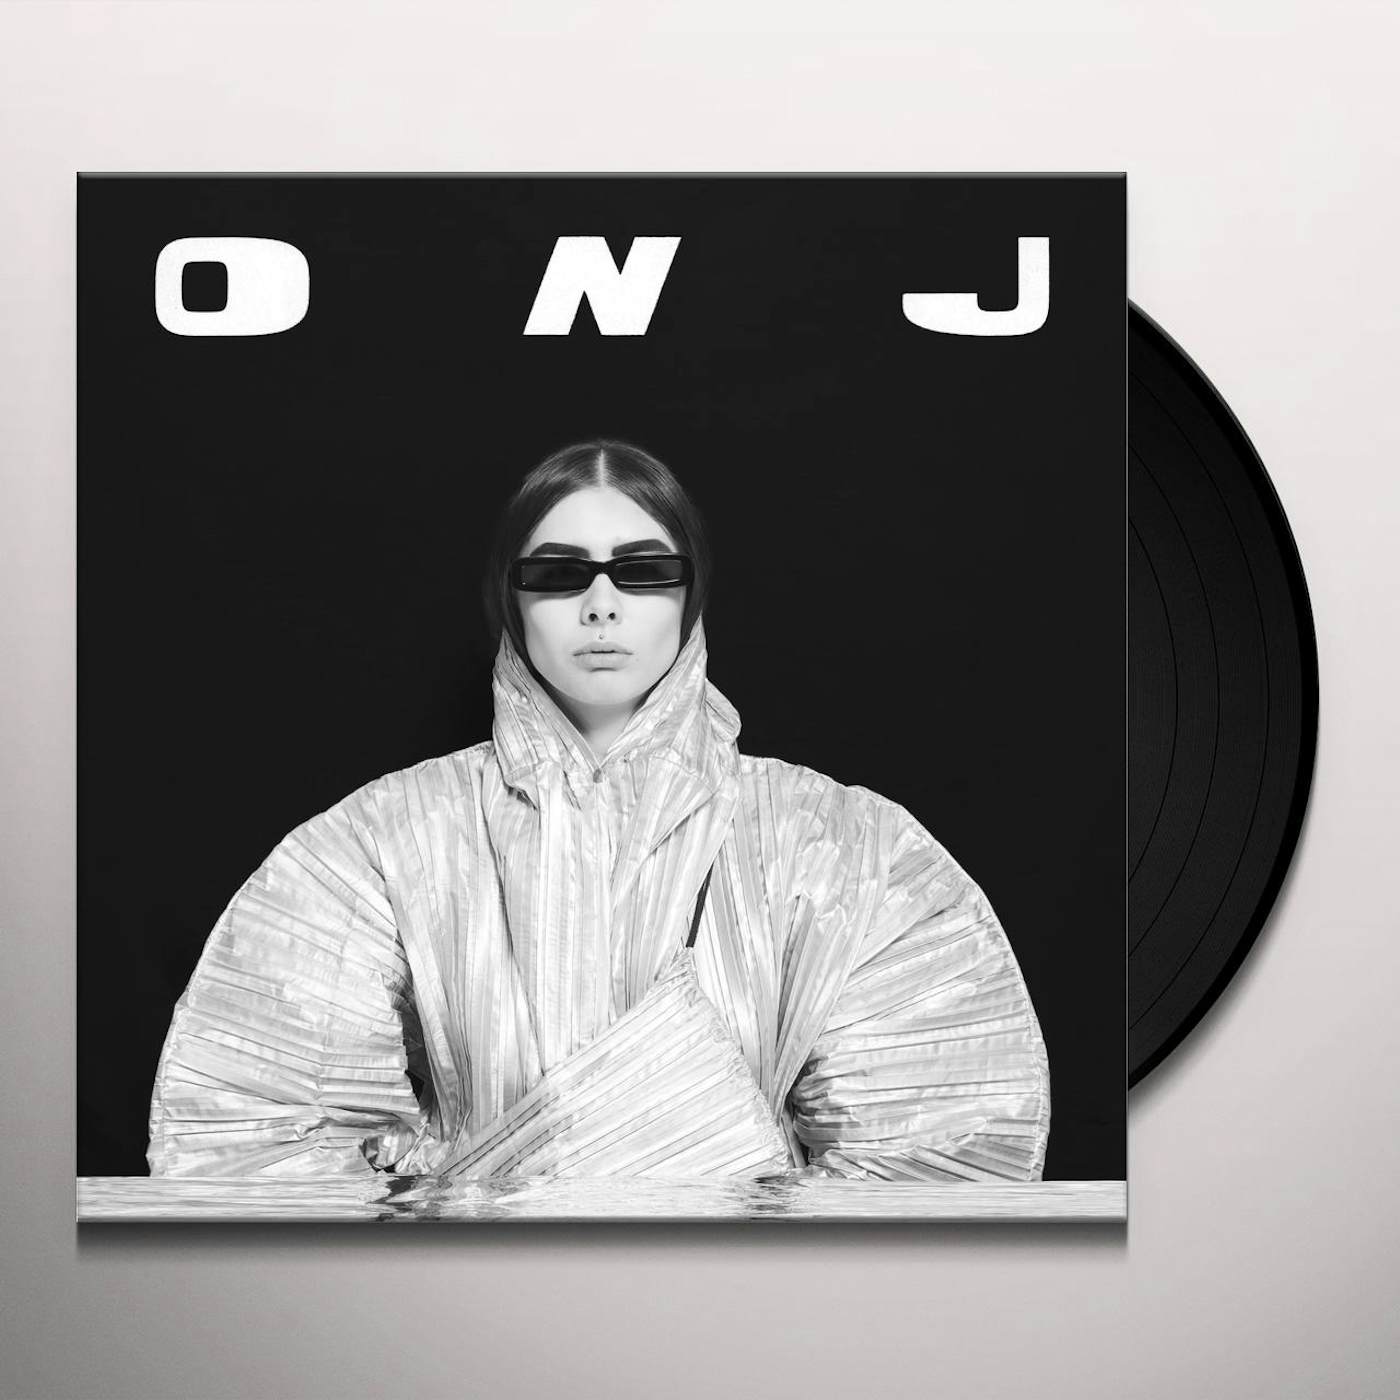 Olivia Neutron-John Vinyl Record